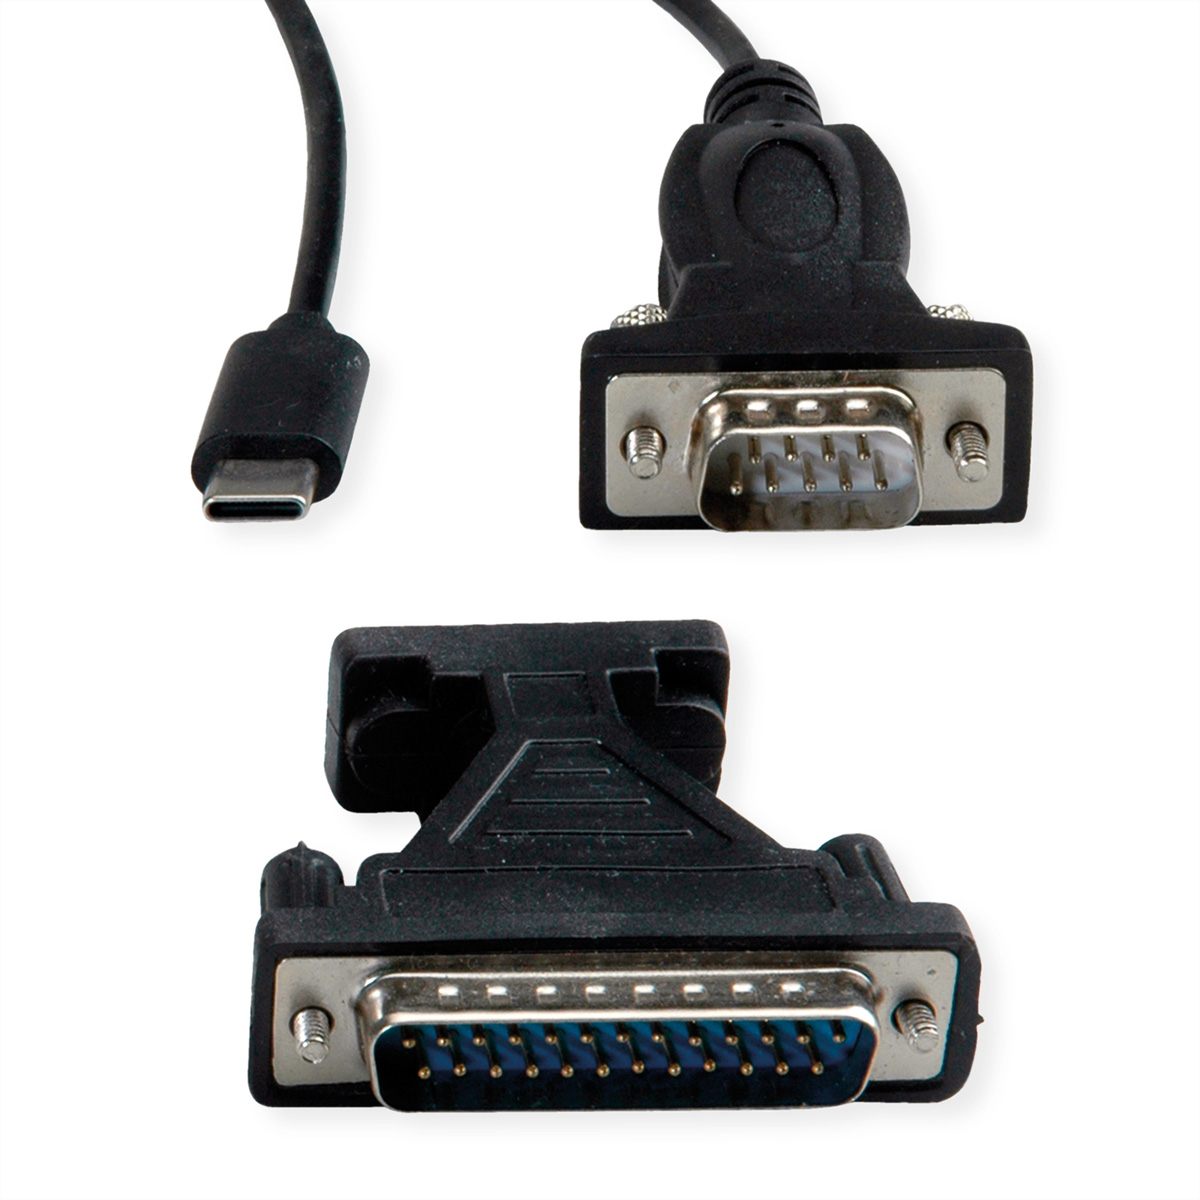 VALUE USB - USB-Seriell Seriell Typ Konverter-Kabel, RS232 C - Konverter